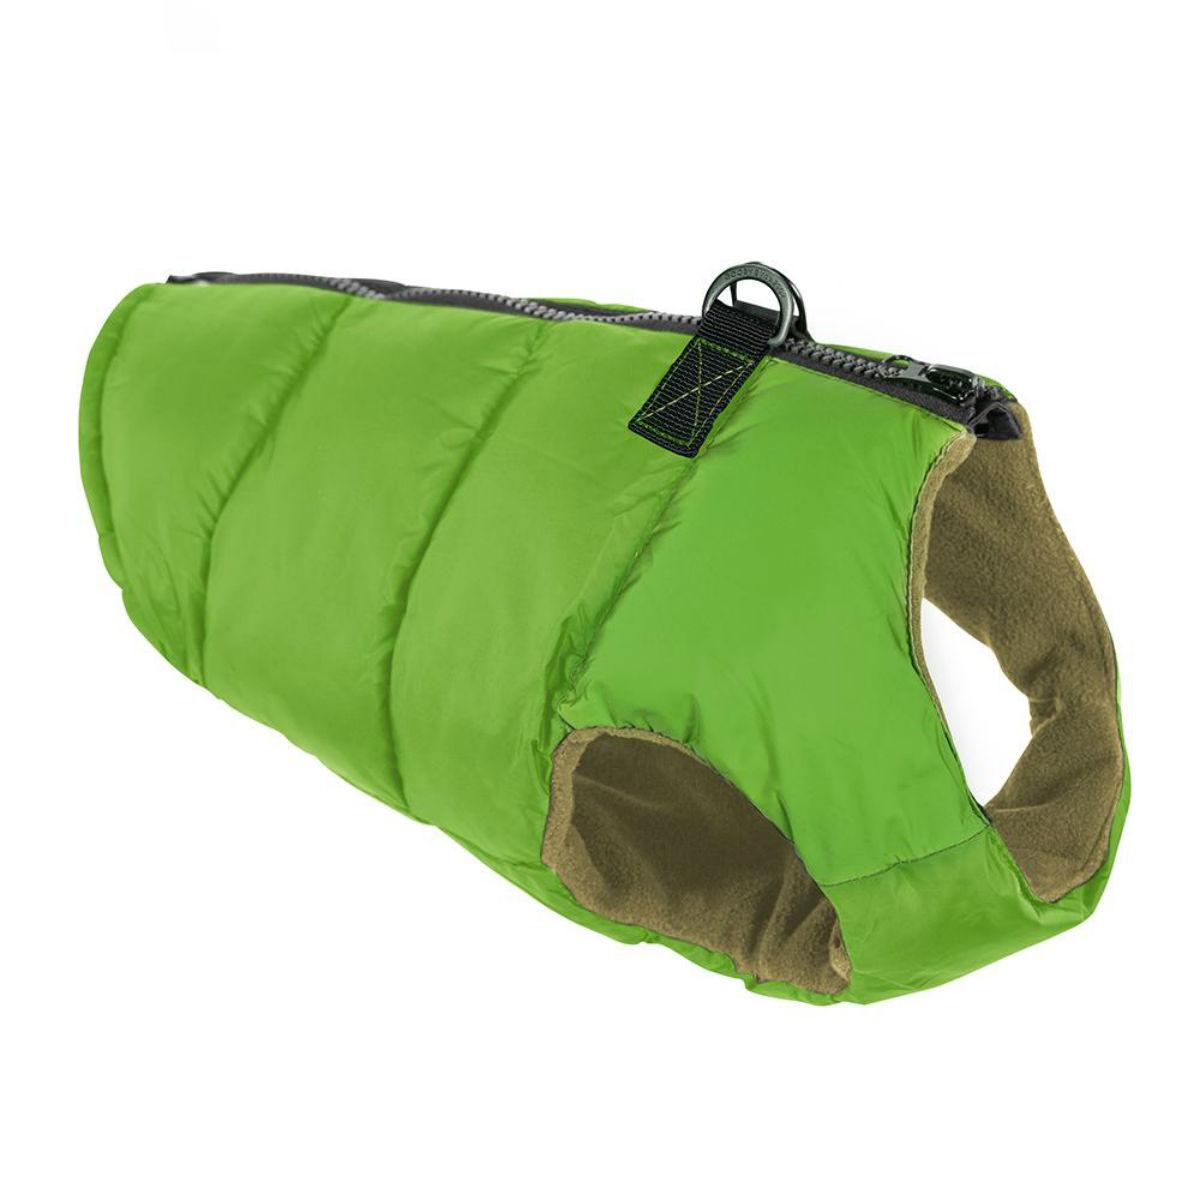 Gooby Padded Dog Vest - Green